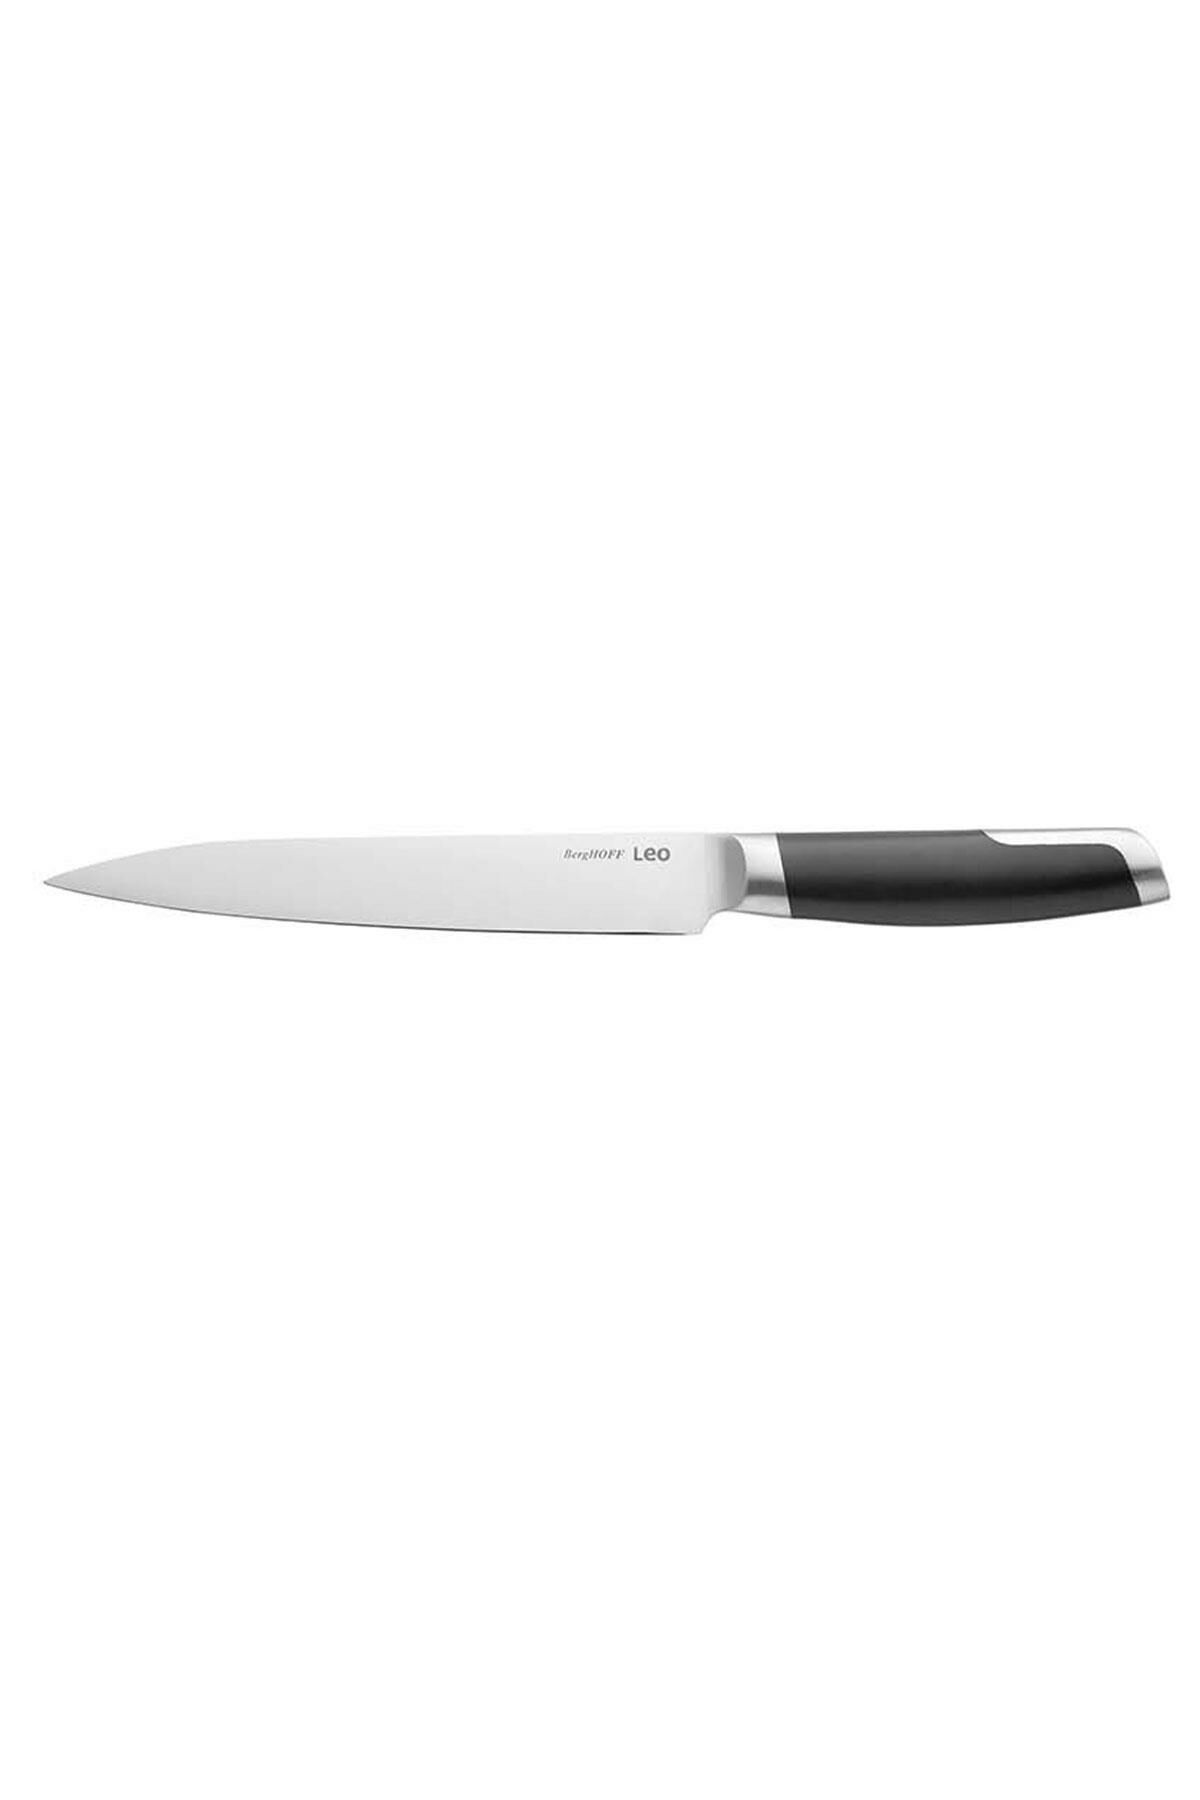 Berghoff Leo Meat Knife